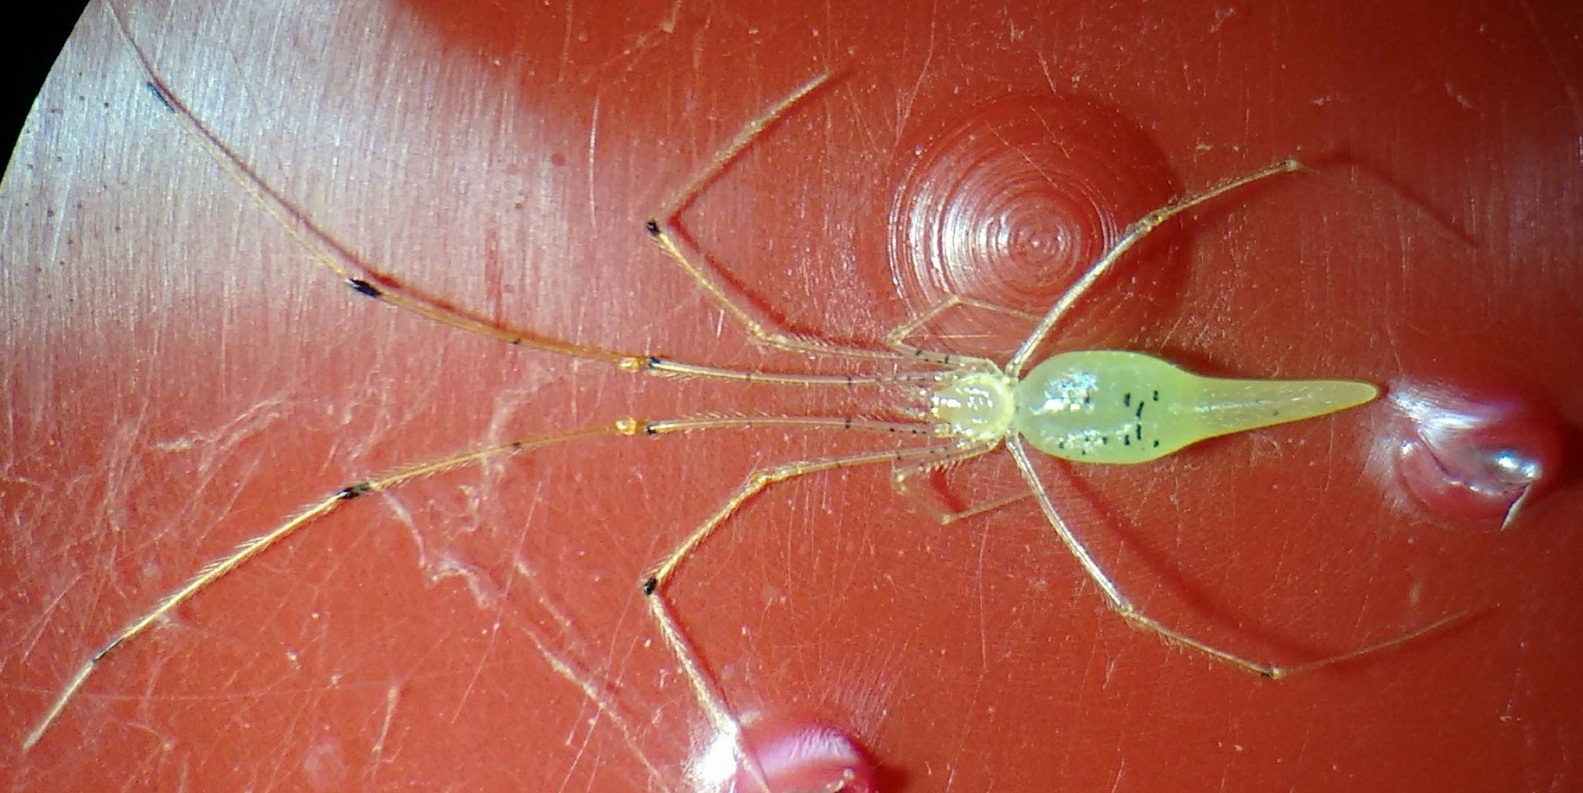 A 'espetacular' nova espécie de aranha descoberta na Austrália